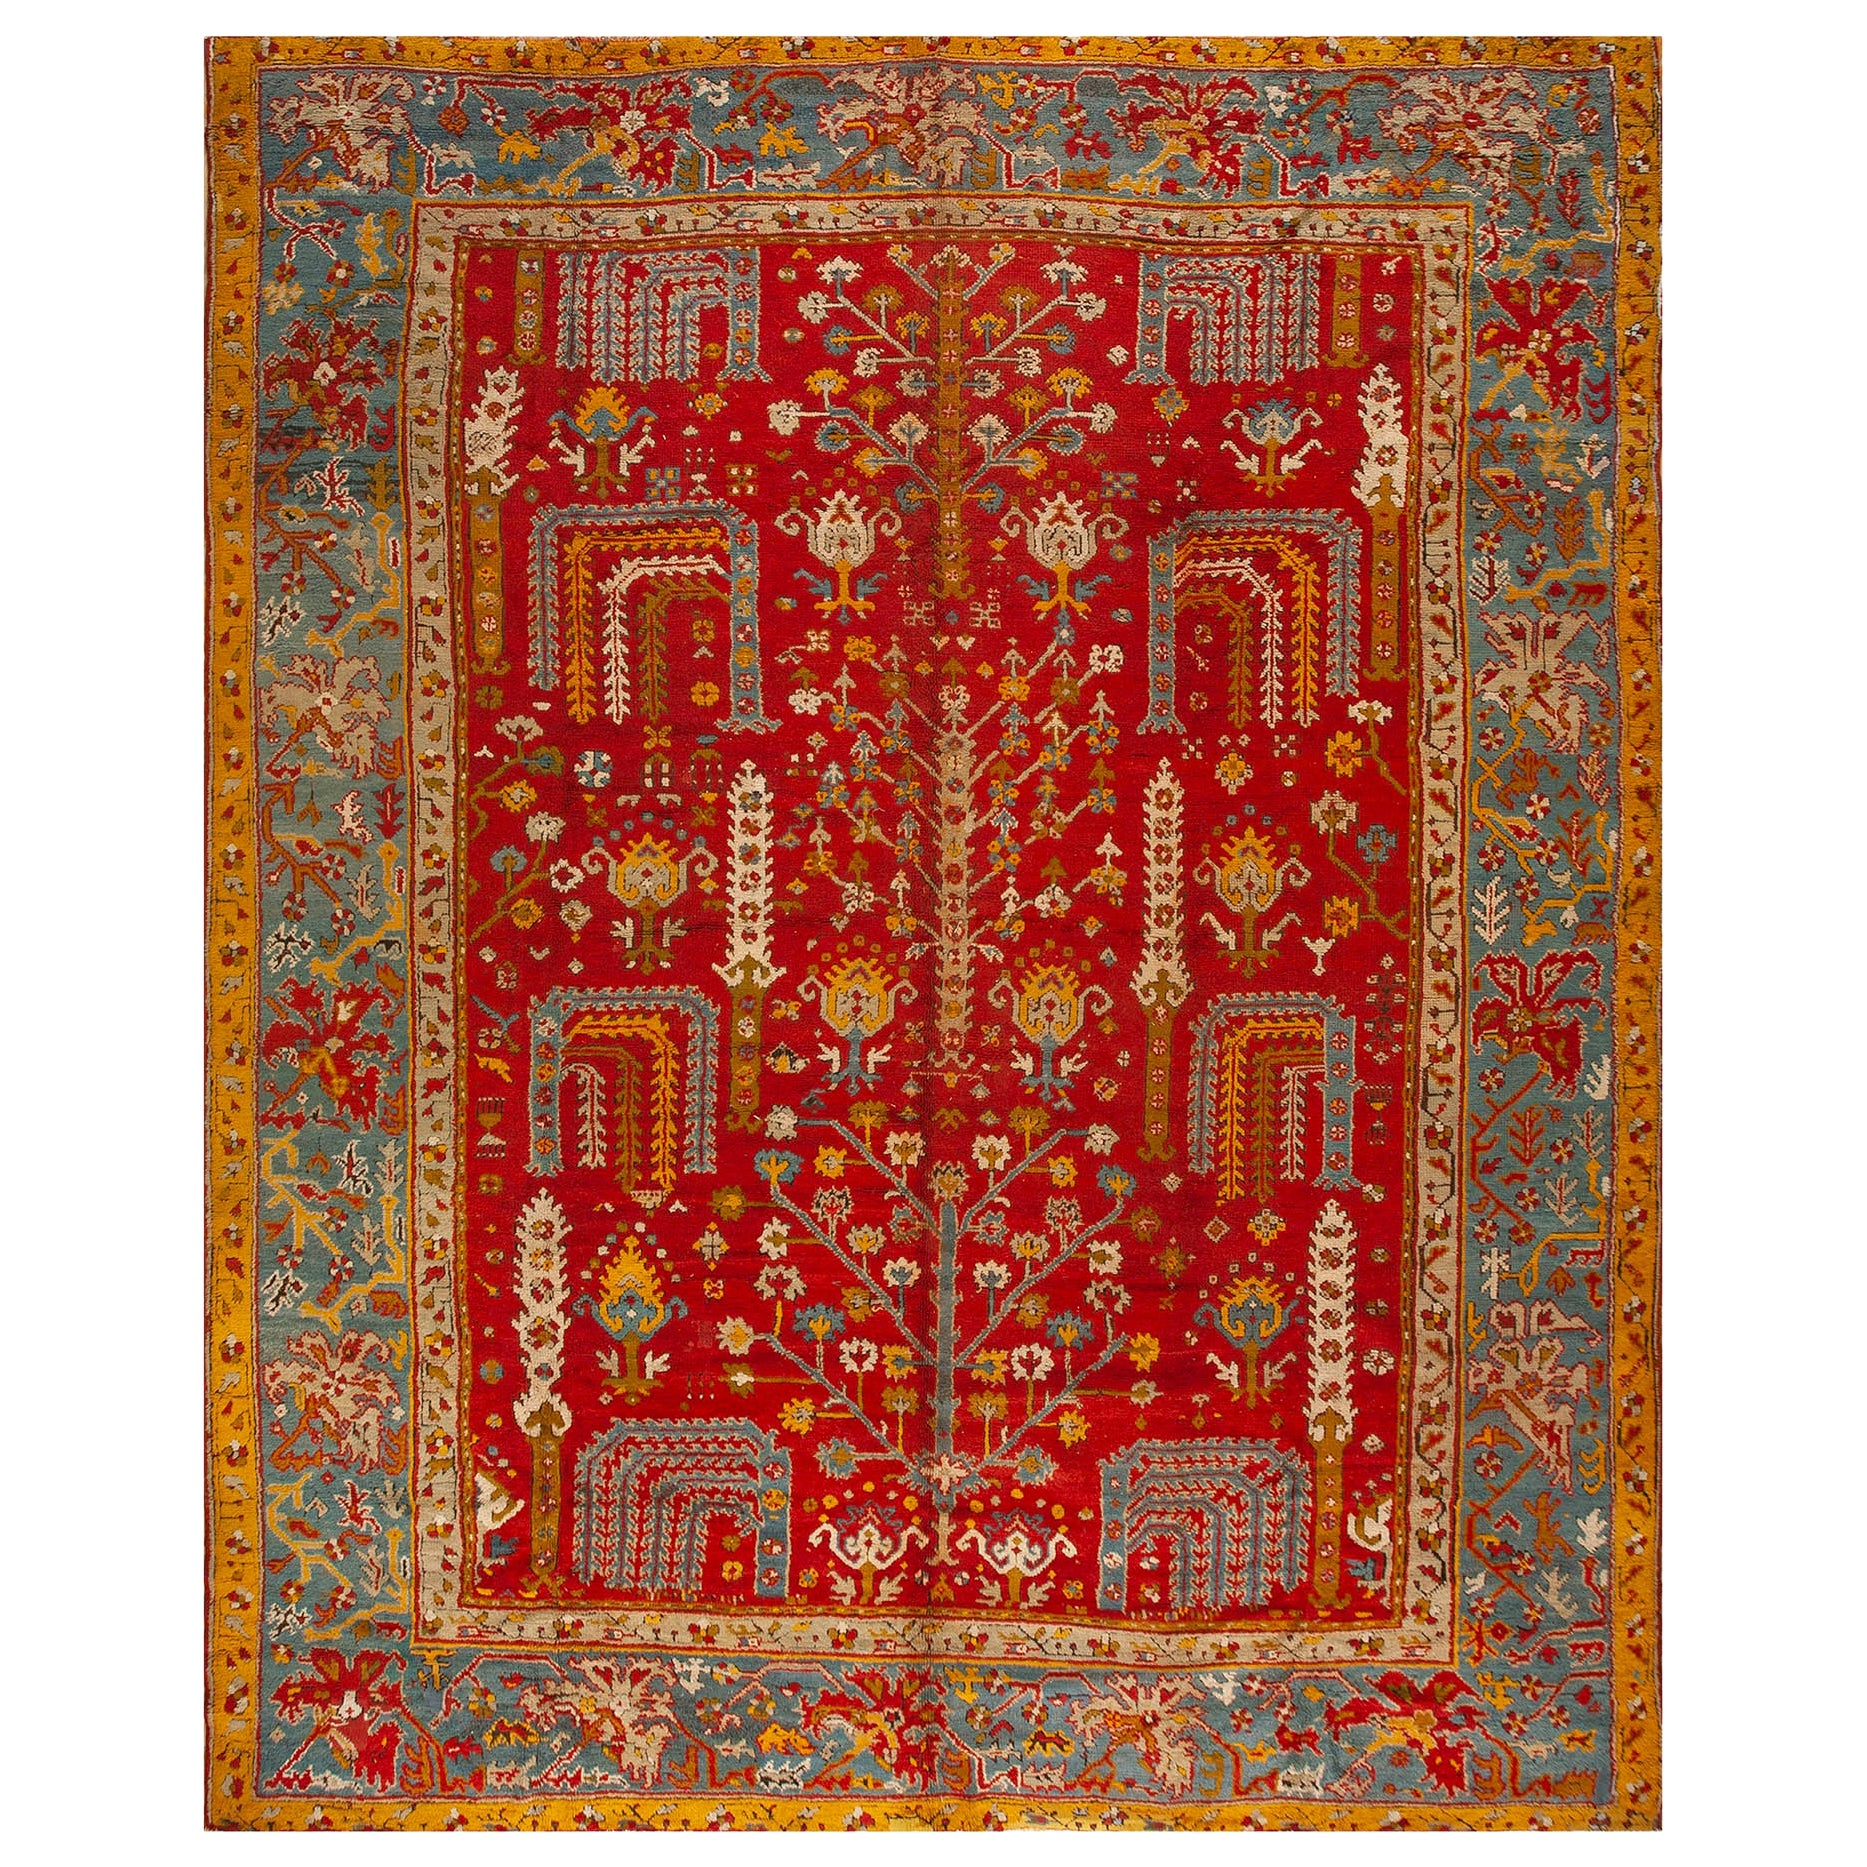 Late 19th Century Turkish Oushak Carpet  ( 11' 5'' x 14' 6'' - 348 x 442 cm )